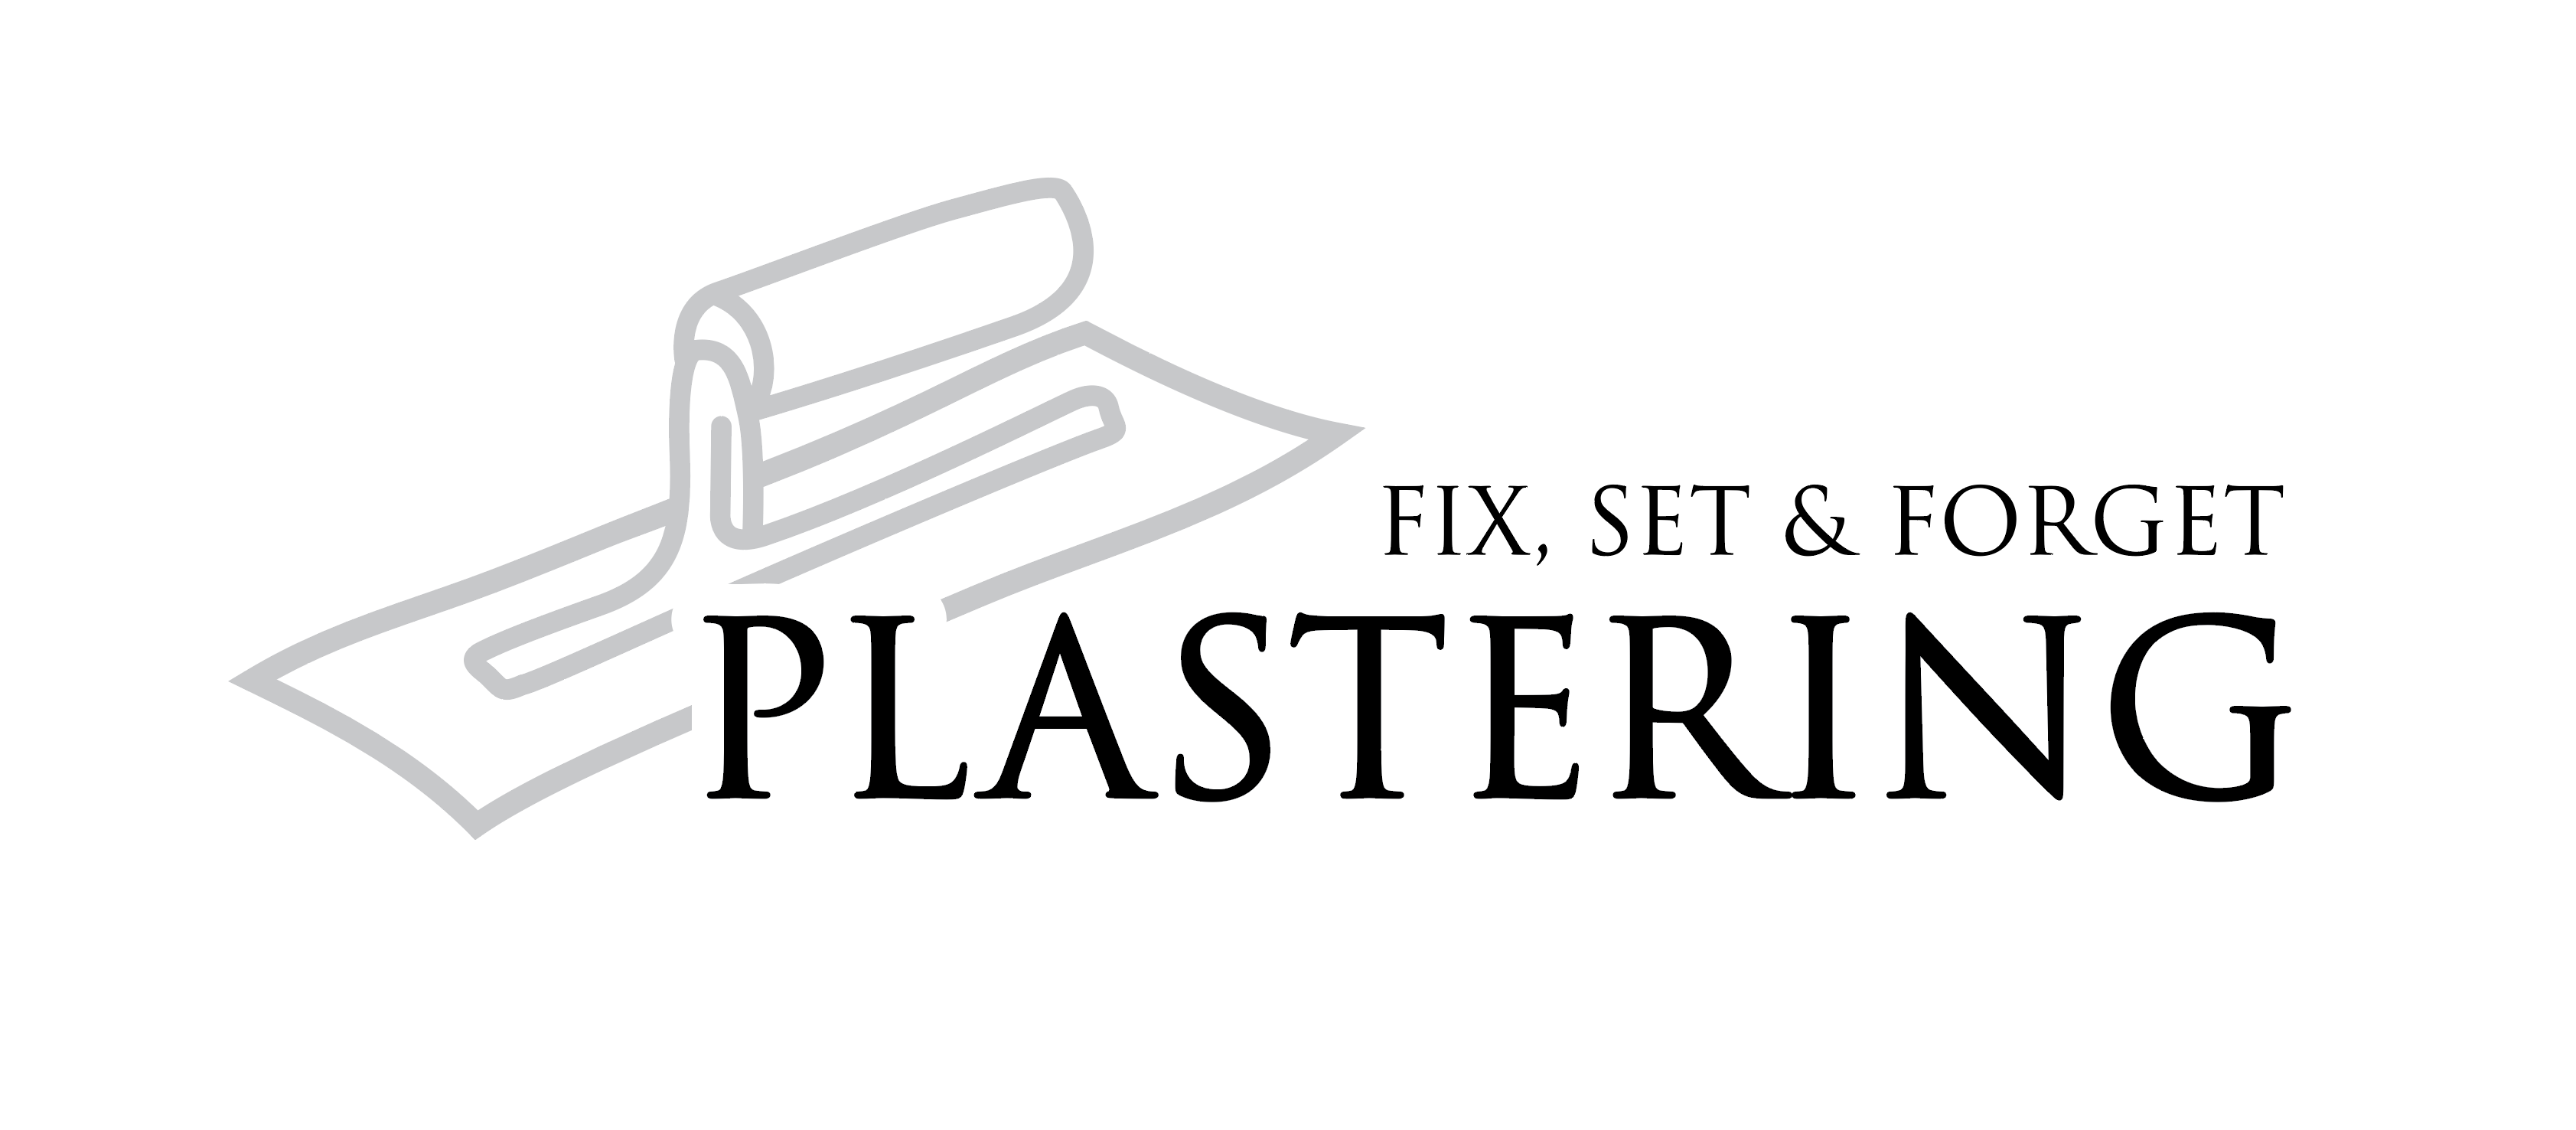 Fix, Set & Forget Plastering